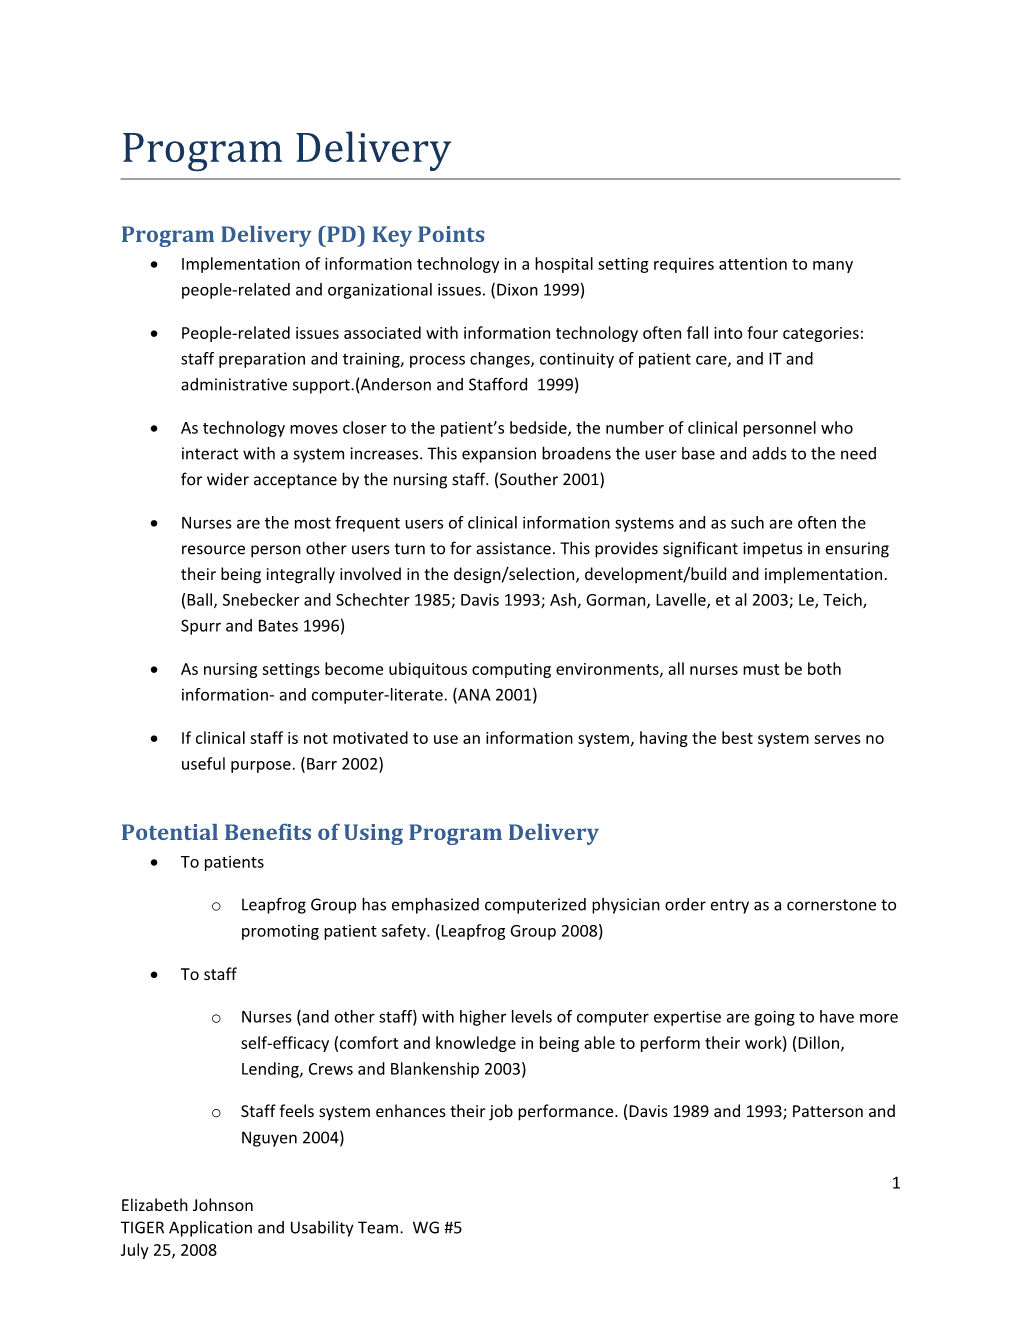 Program Delivery (PD) Key Points